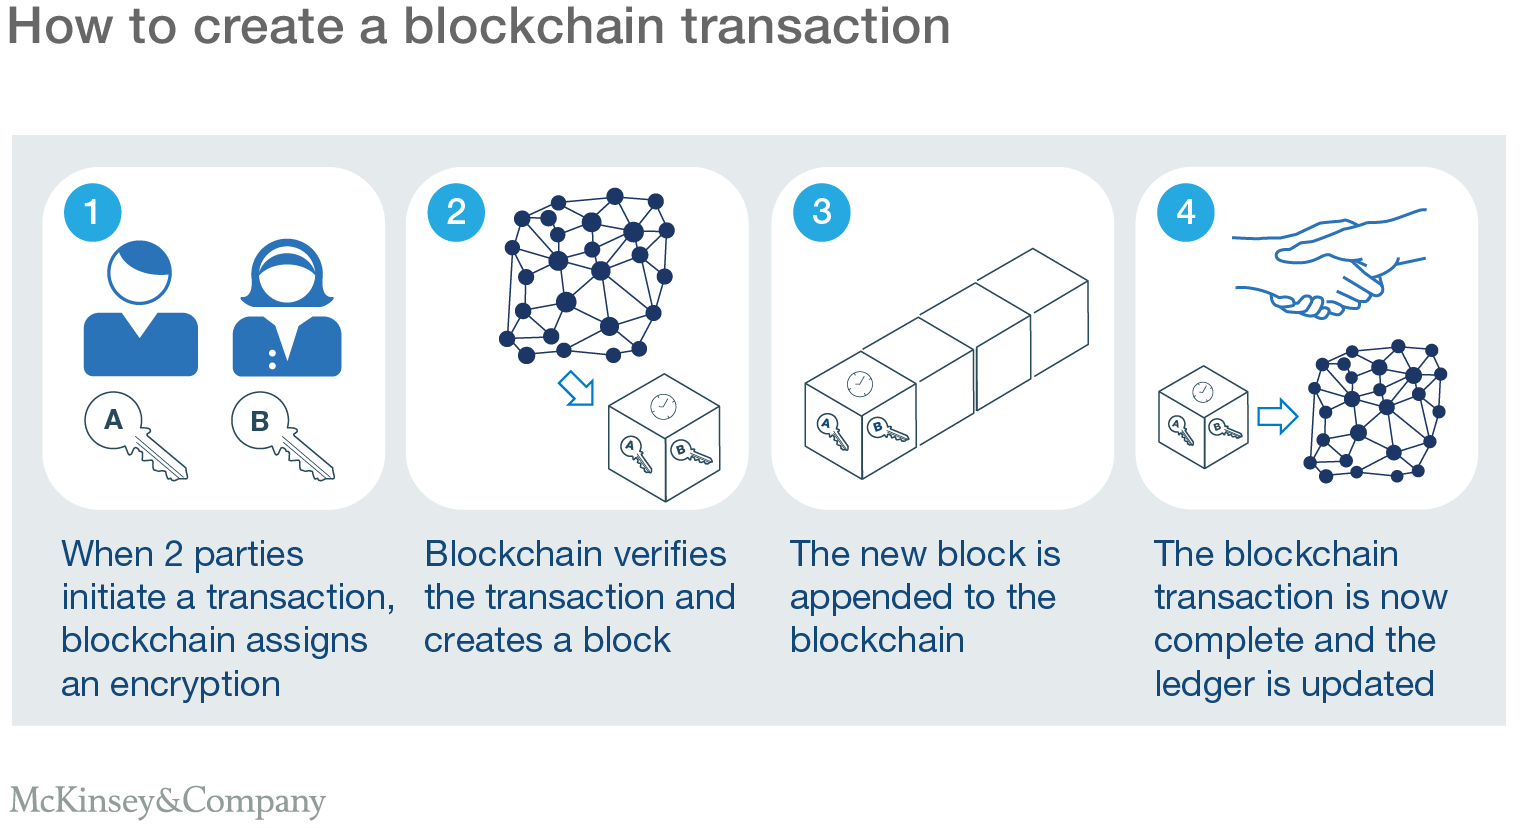 Transparent Supply Chains: Blockchain Tracking Revolution